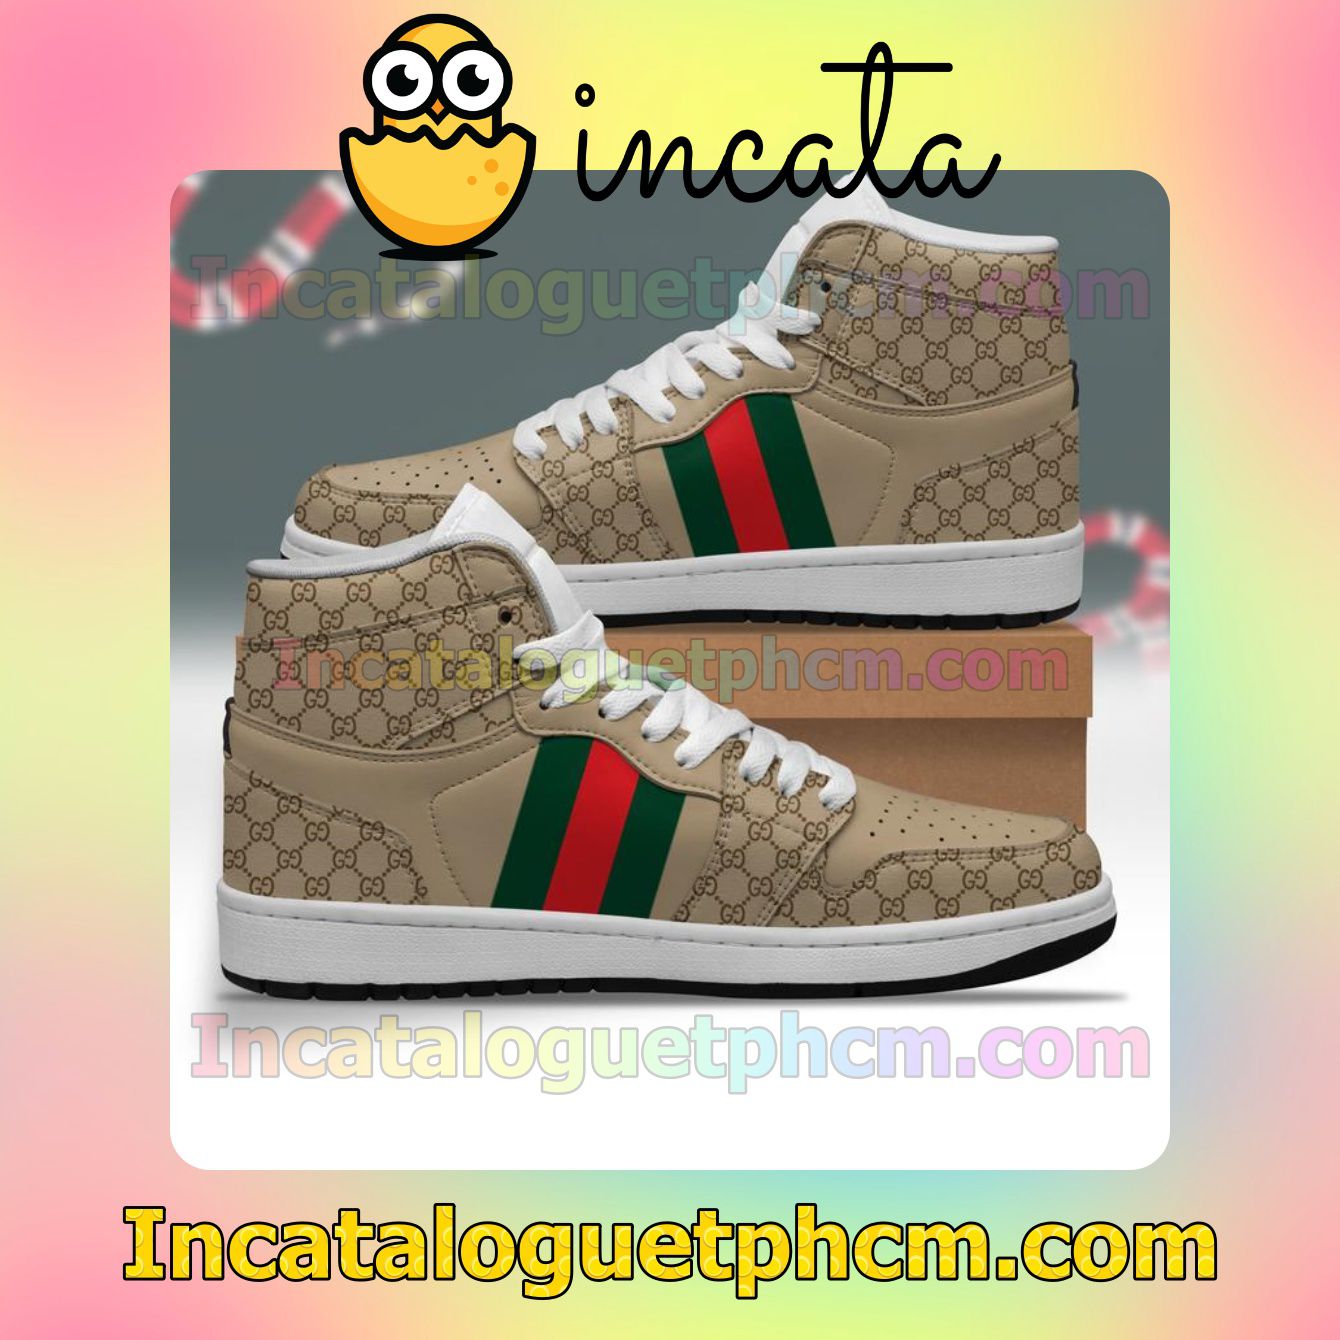 Gucci Air Jordan 1 Inspired Shoes